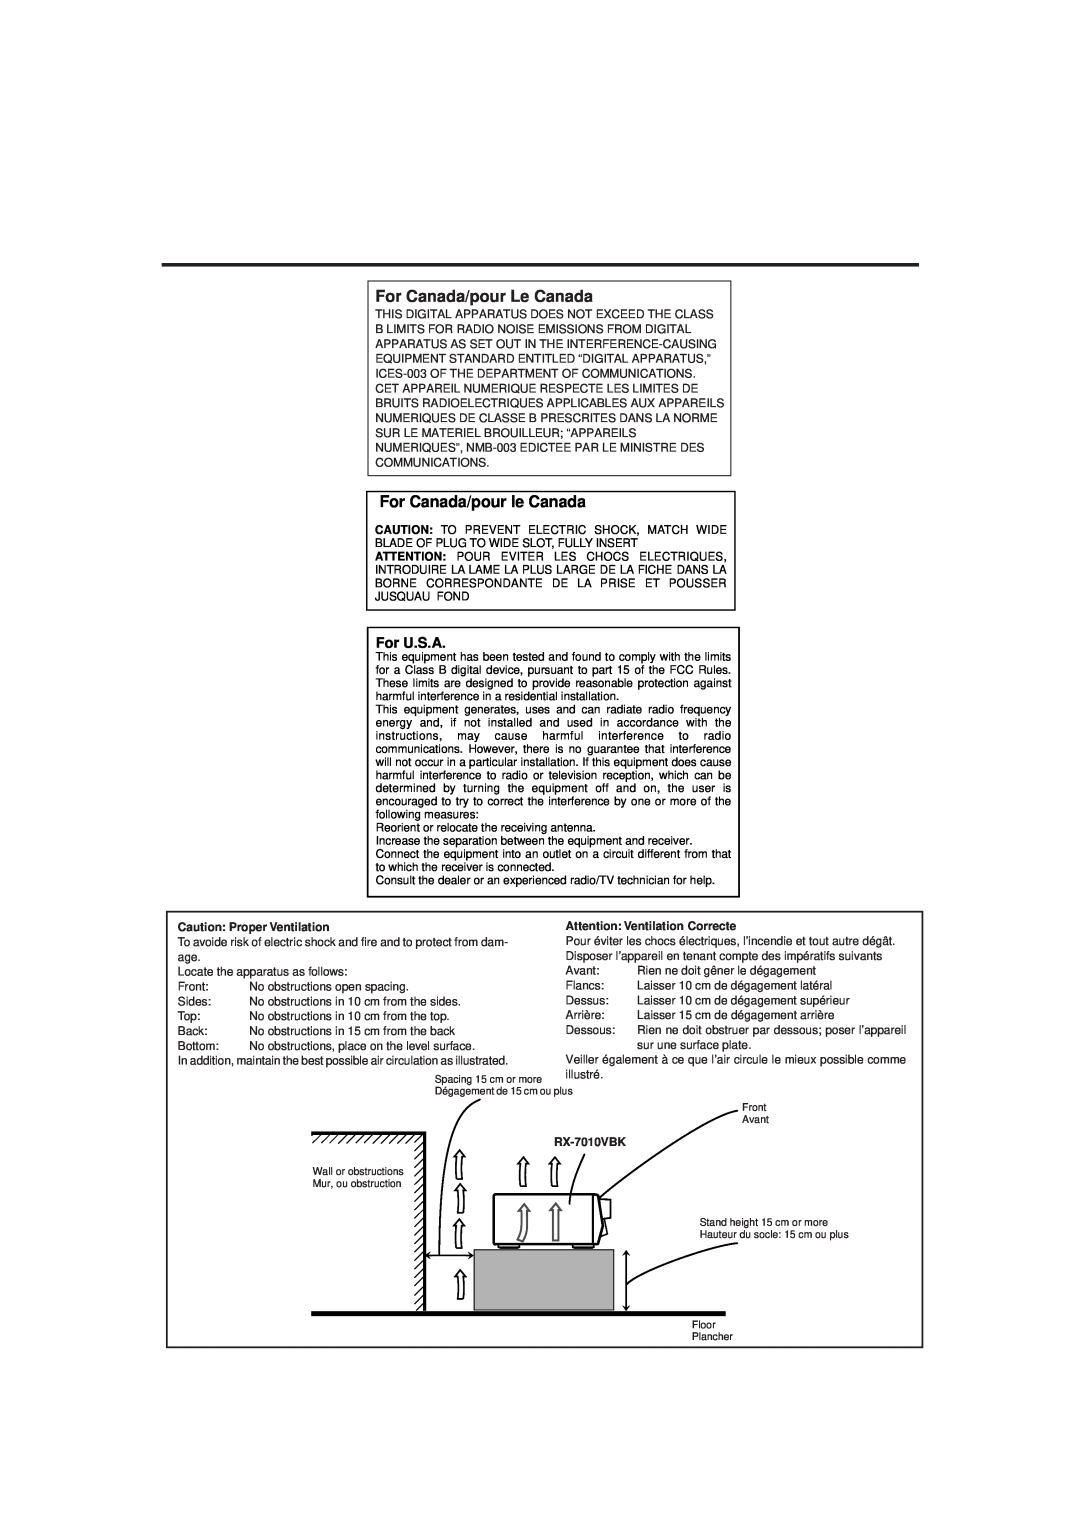 JVC RX-7010VBK manual For Canada/pour Le Canada, For Canada/pour le Canada, For U.S.A, Caution Proper Ventilation 